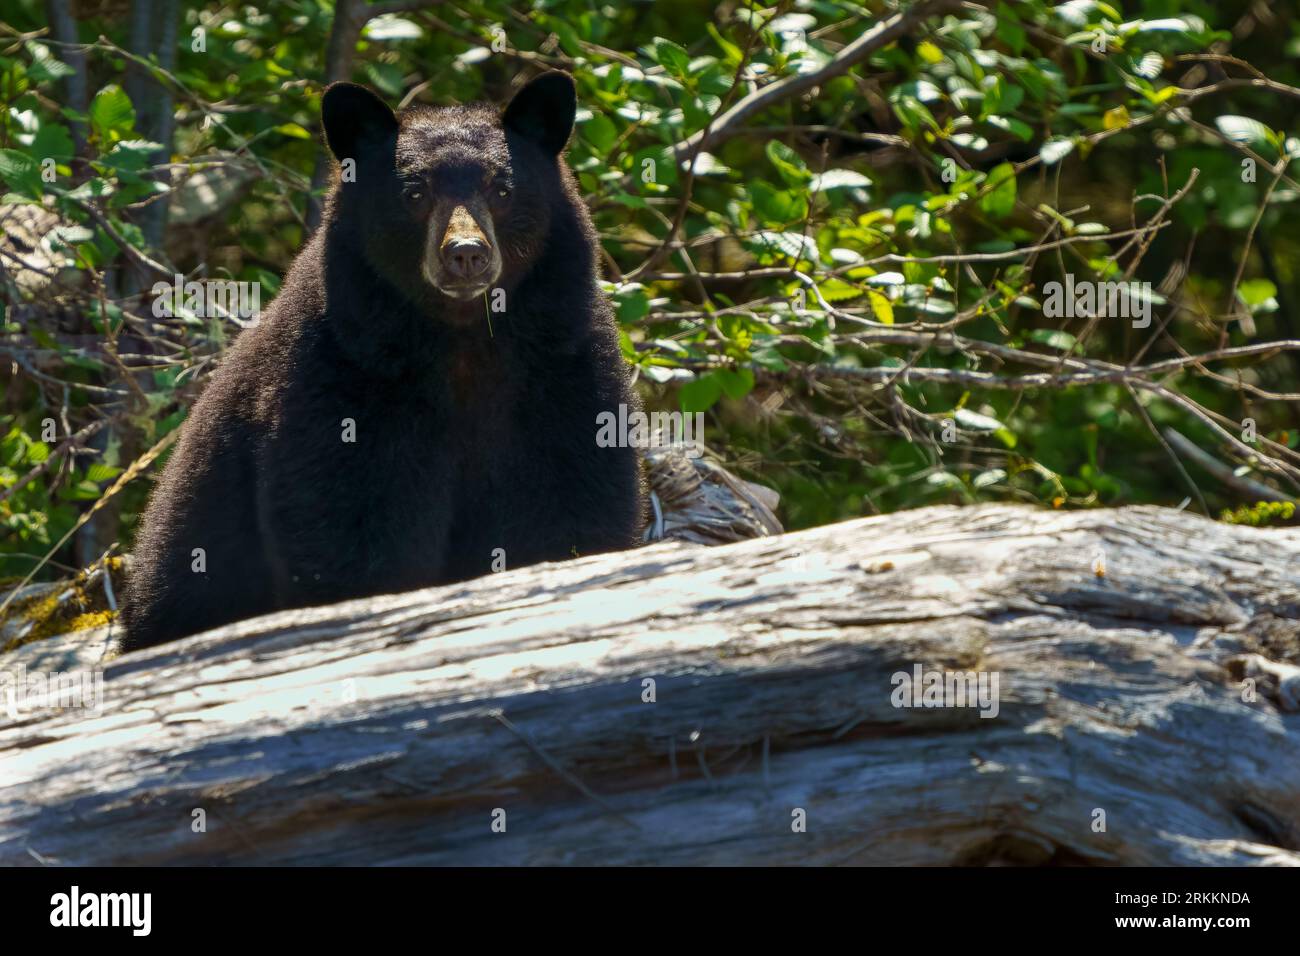 Black bear (Ursus americanus) peeking over a large log in Knight Inlet, First Nations Territory, Traditional Territories of the Kwakwaka'wakw People, Stock Photo